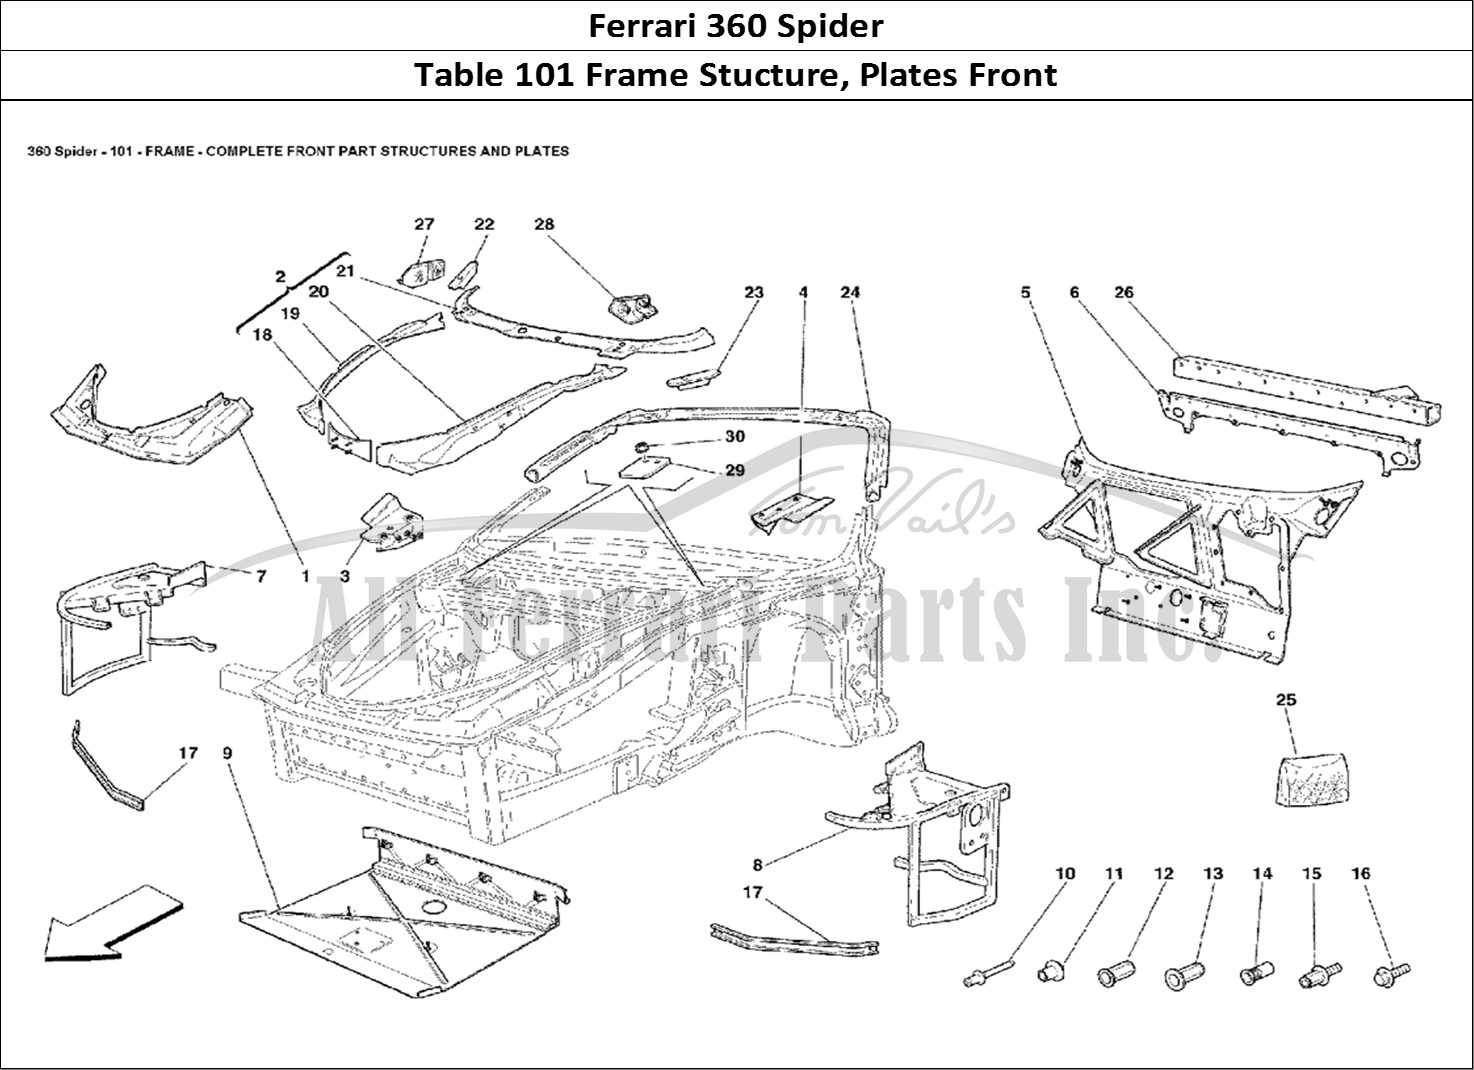 Ferrari Parts Ferrari 360 Spider Page 101 Frame - Complete Front Pa